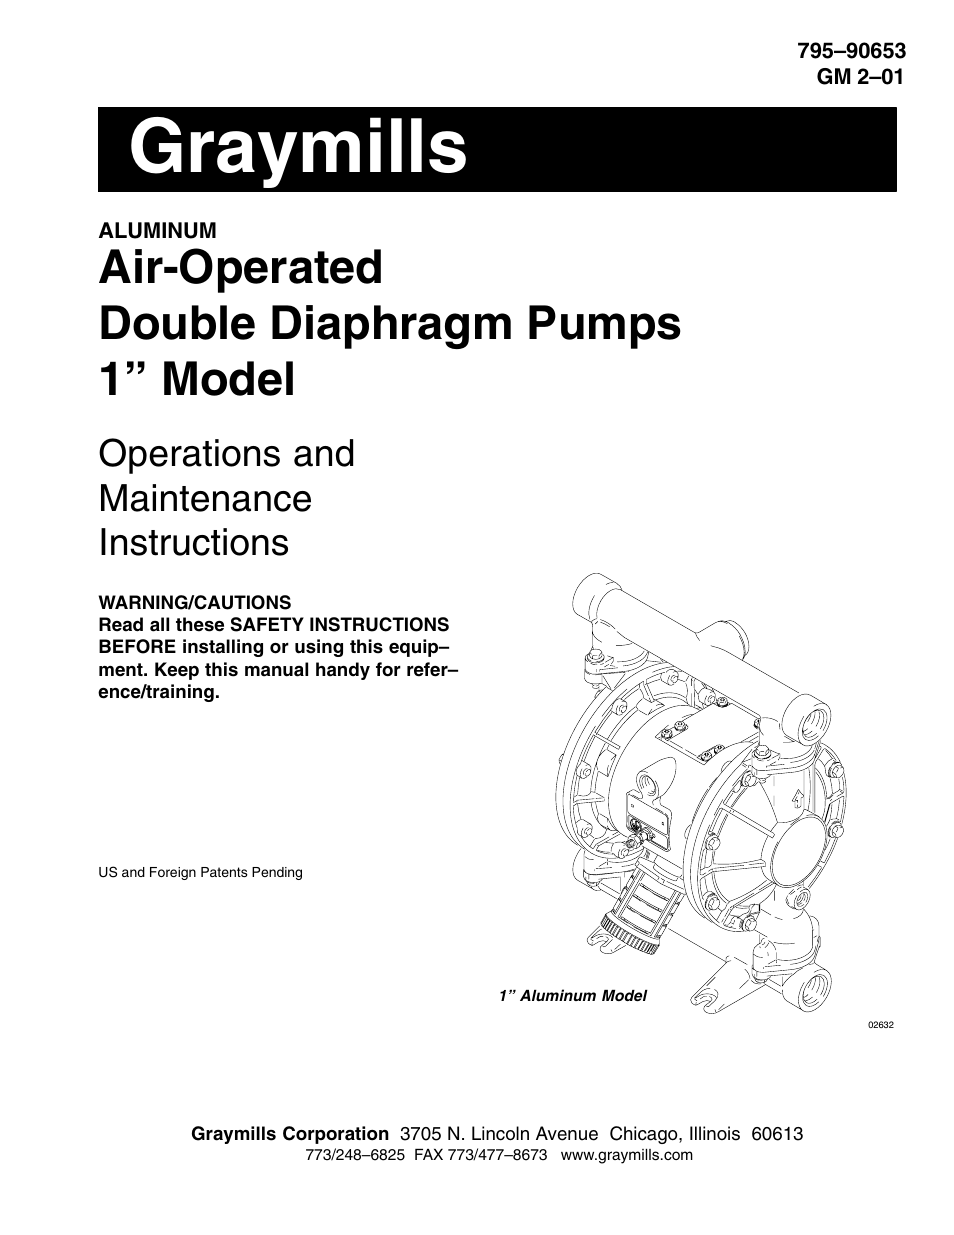 Graymills DDP 1' Aluminum Pump User Manual | 26 pages